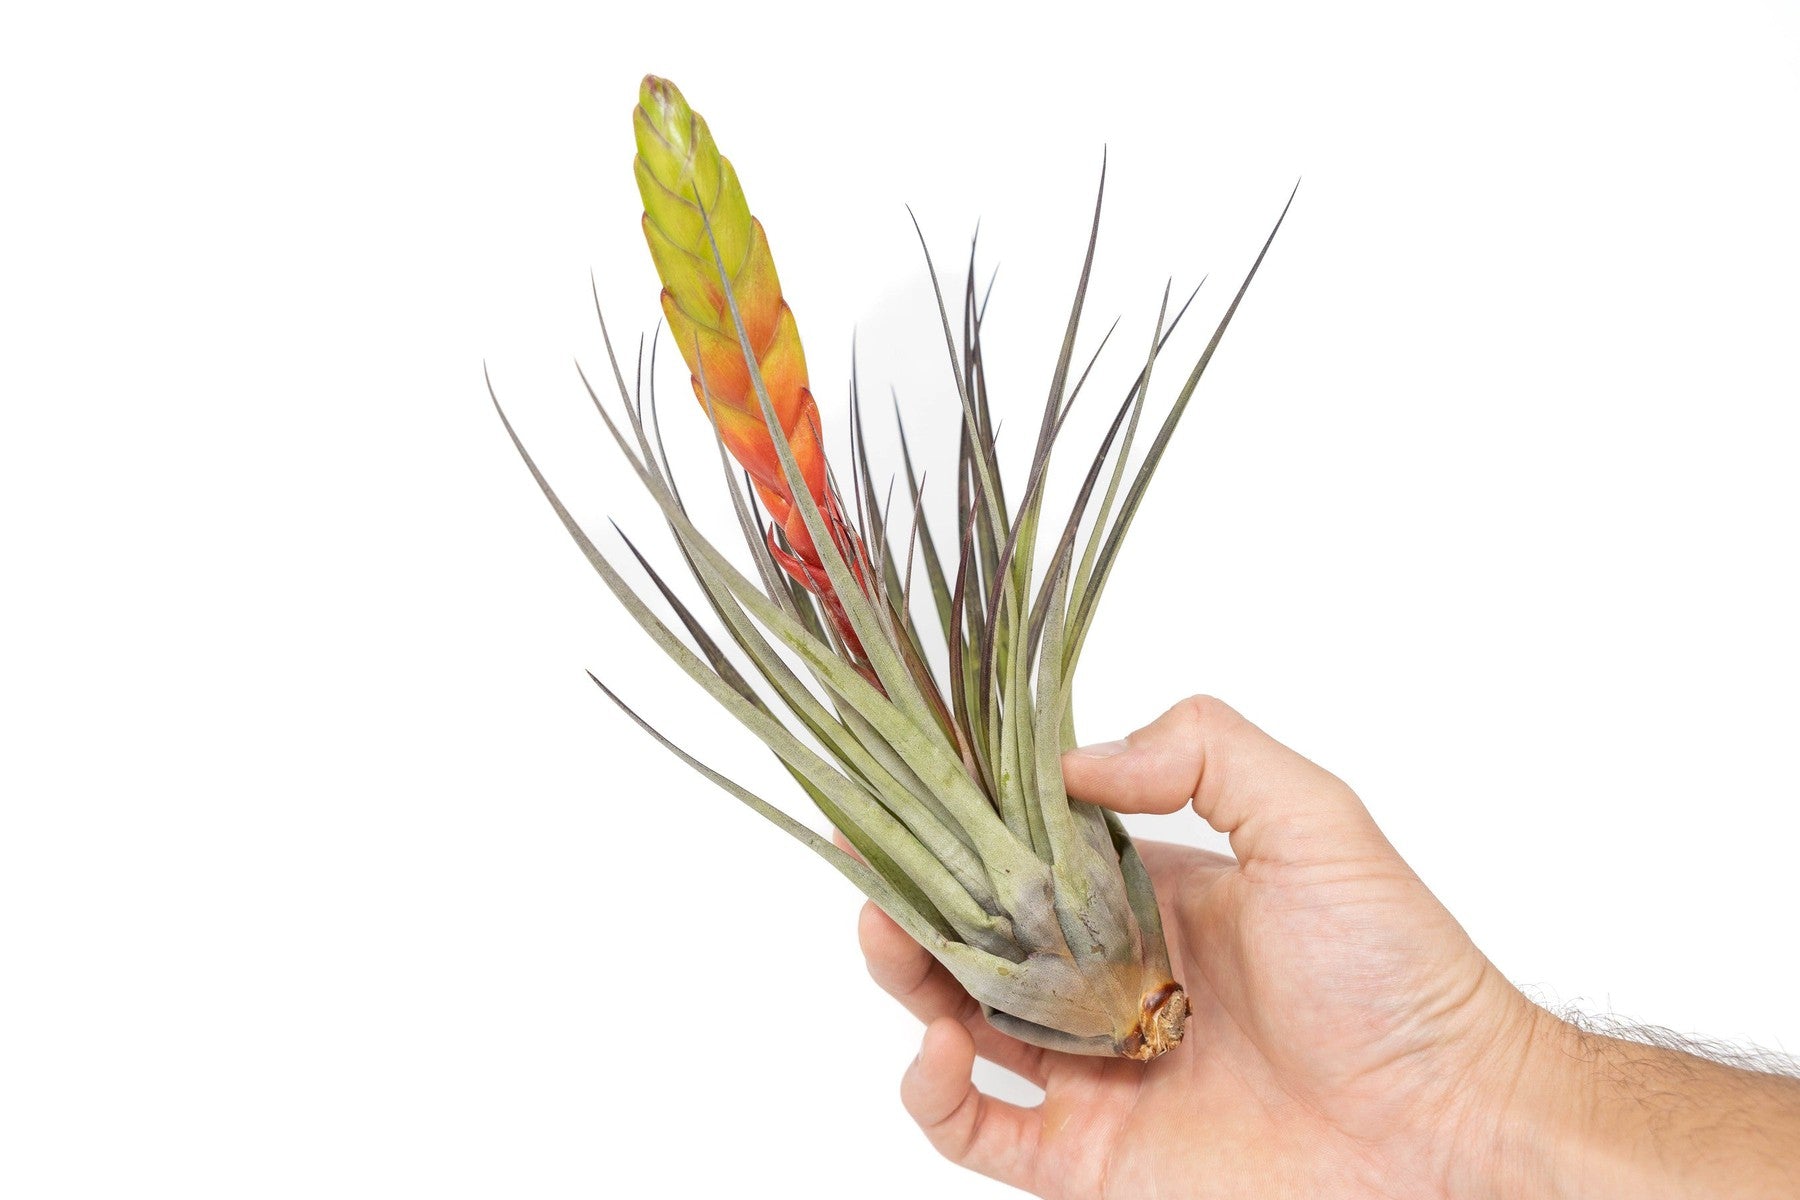 SALE - Large Tillandsia Fasciculata Tricolor Air Plants - Set of 5 or 10 - 50% Off-airplant-The Succulent Source